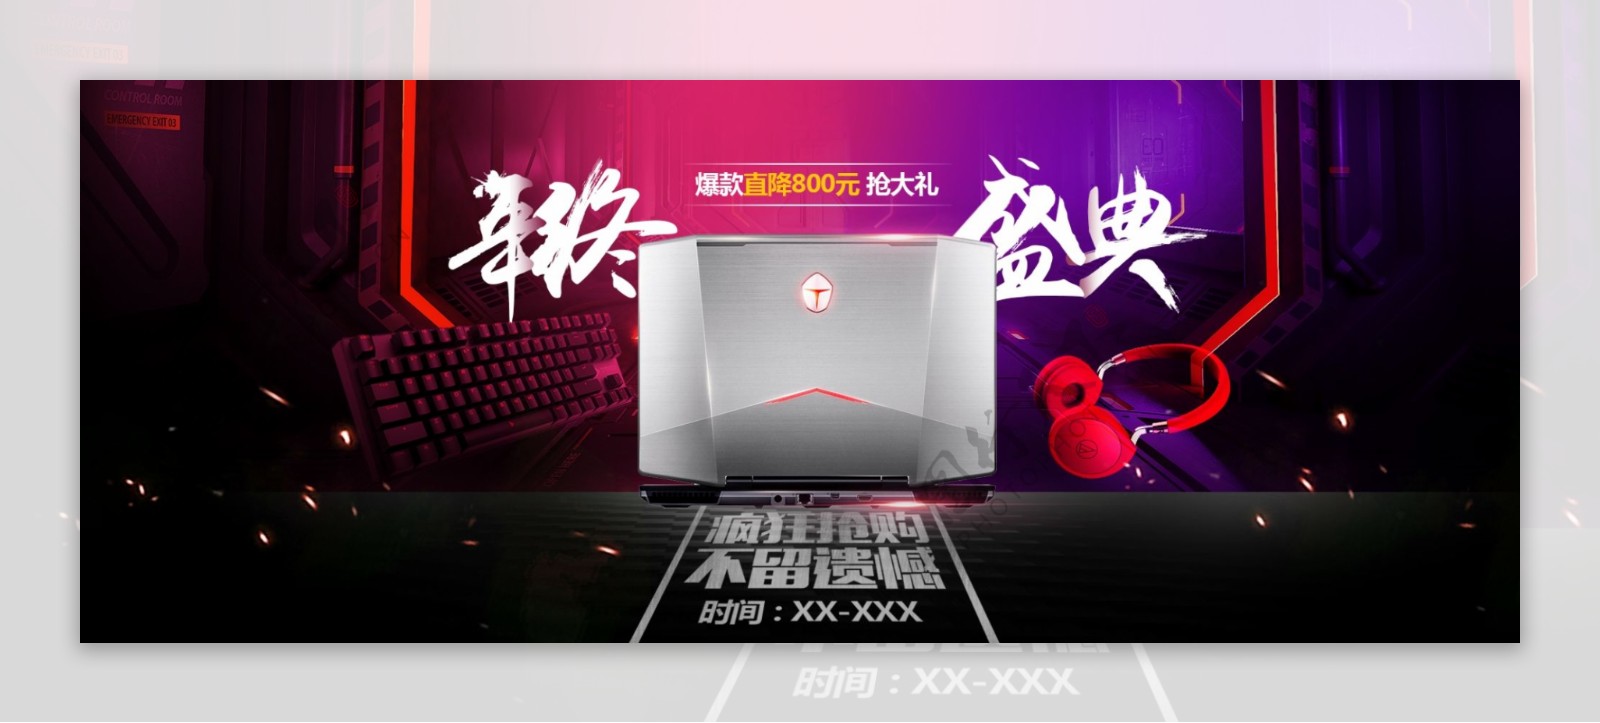 炫酷笔记本电脑促销banner